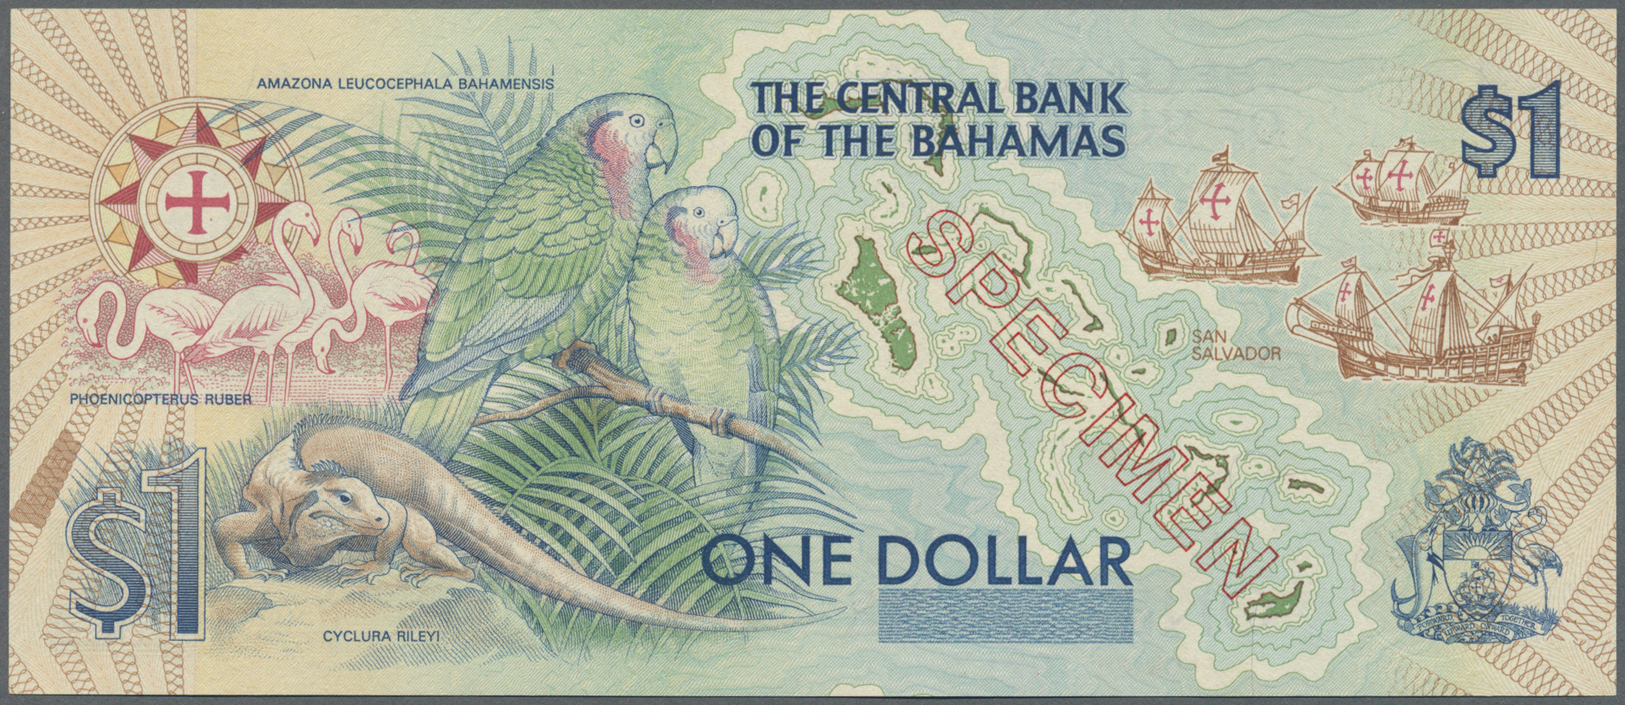 00230 Bahamas: 1 Dollar Commemorative Issue 1992 Specimen P. 50s In Condition: UNC. - Bahamas